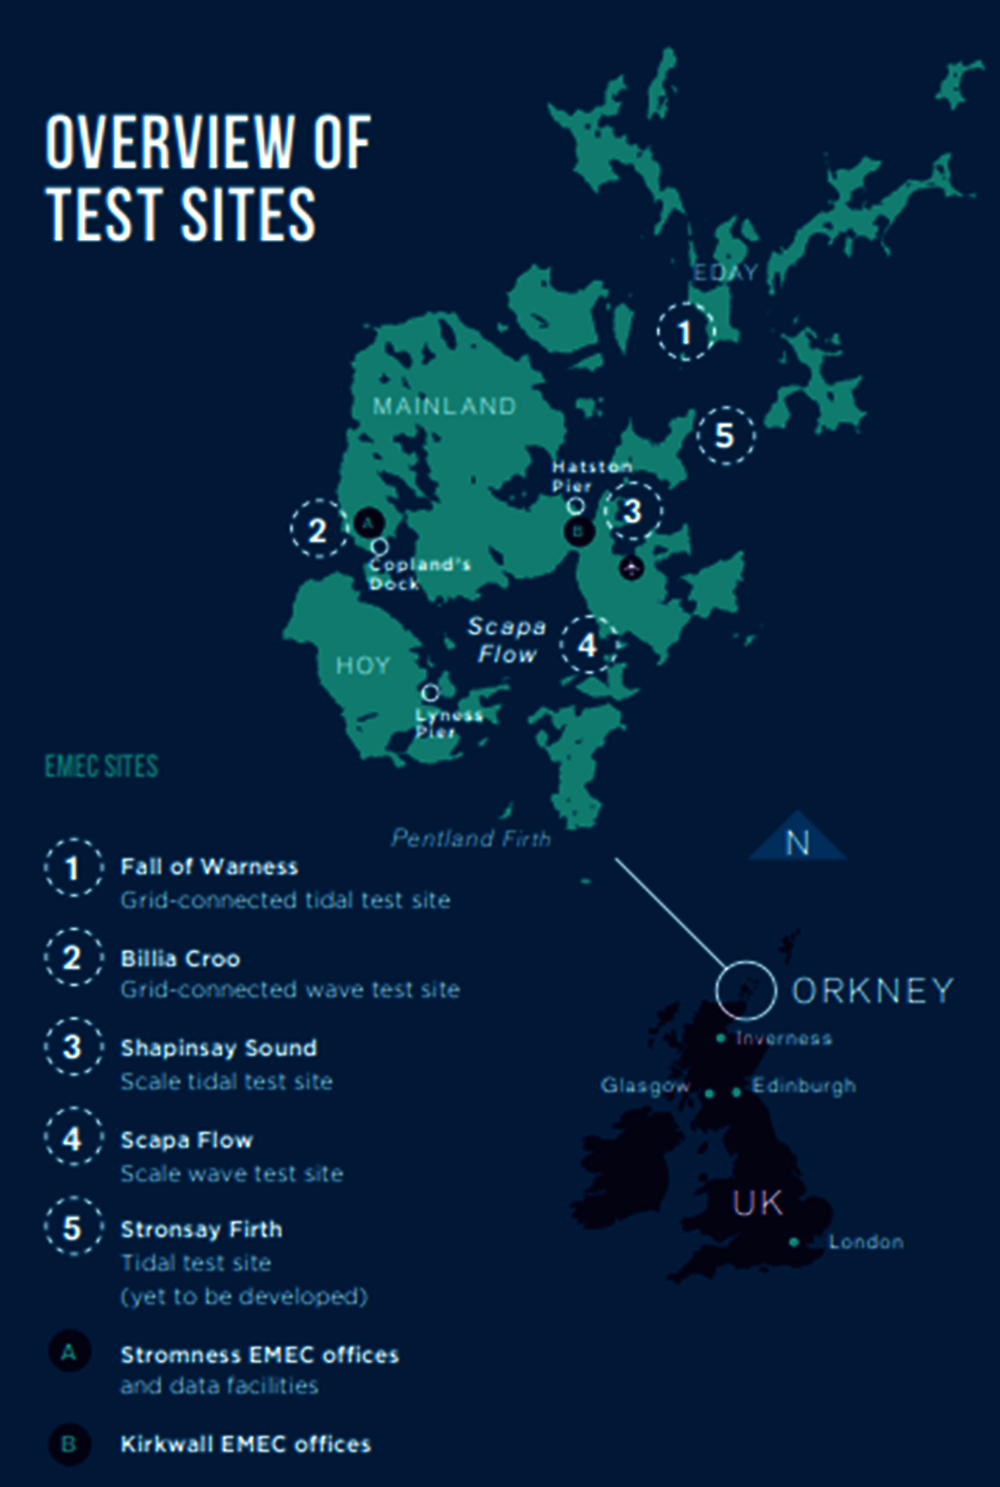 Figure 5.3. EMEC Test Site locations around Orkney